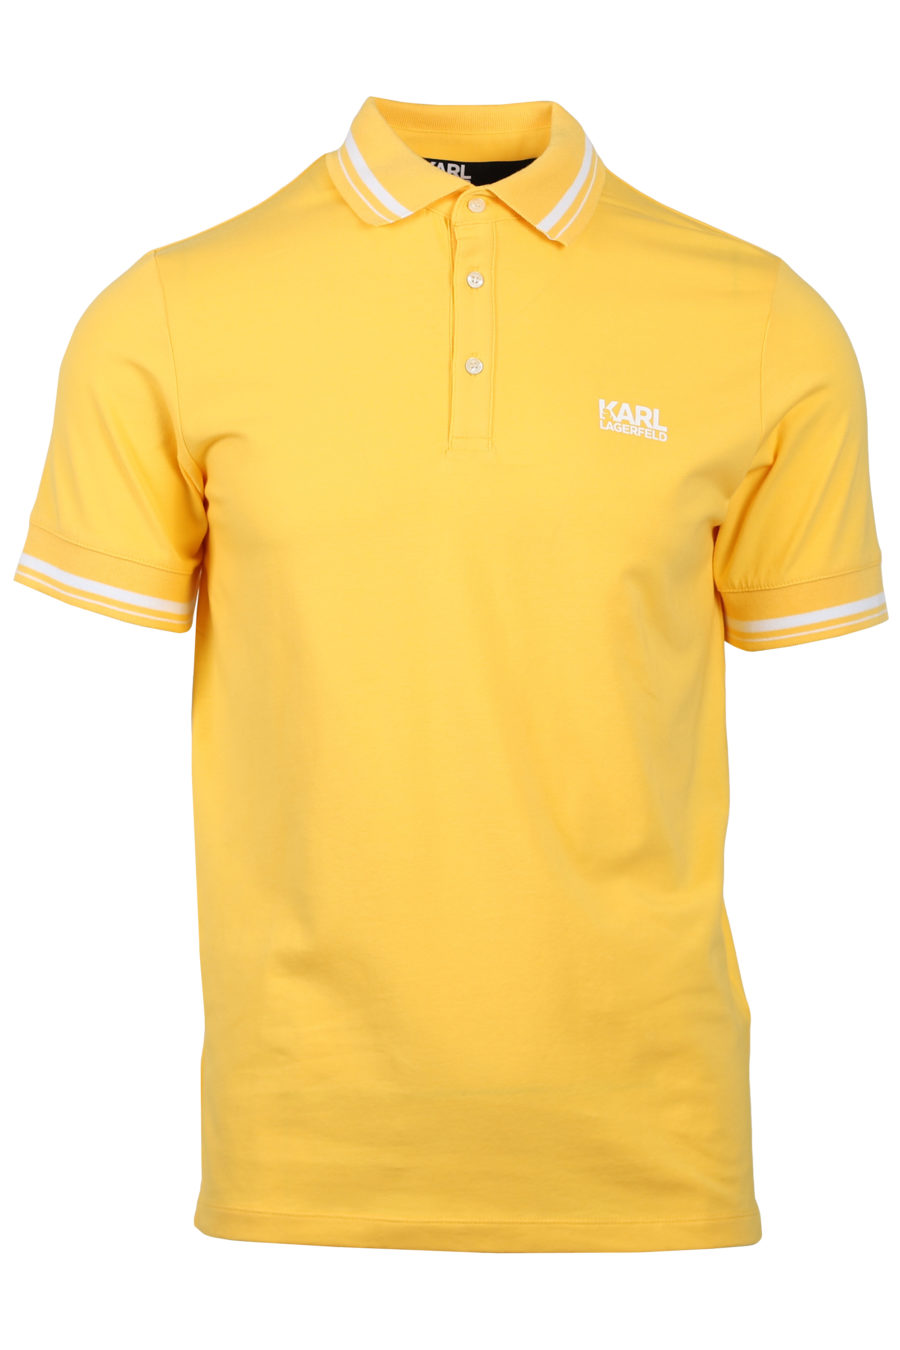 Poloshirt gelbes Logo weiß - IMG 2027